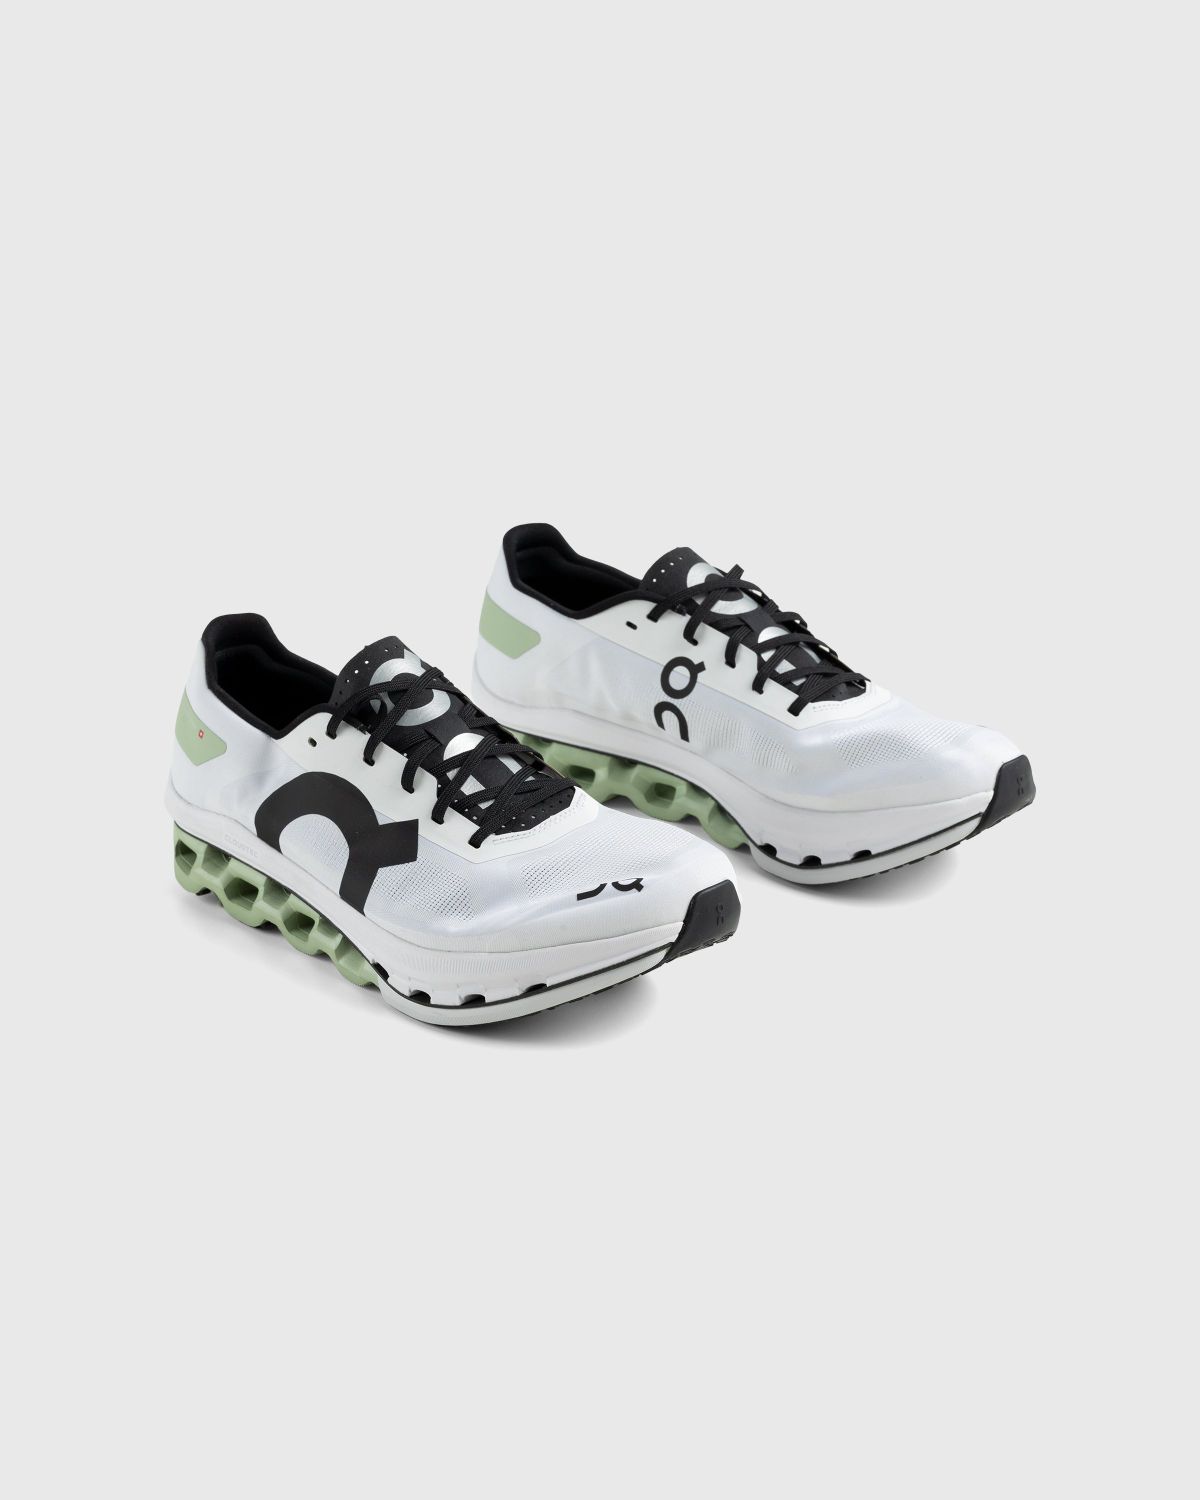 On – Cloudboom Echo White/Black - Low Top Sneakers - White - Image 3